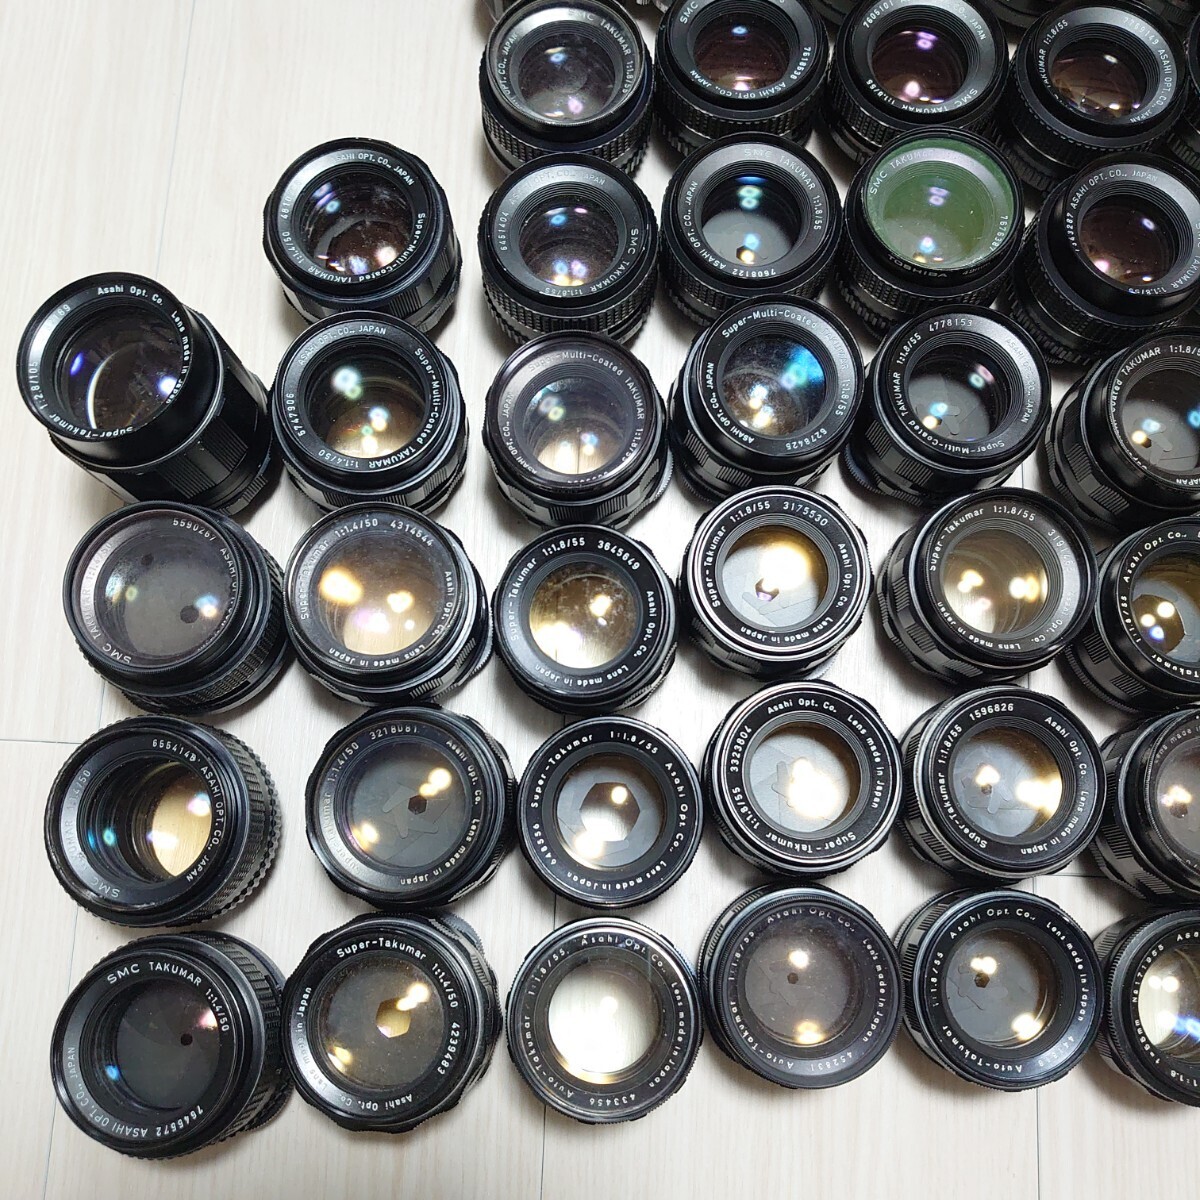 Pentax super takumar スーパータクマー 75本 単焦点レンズ 標準レンズ 望遠レンズ 引越しのためカメラ用品色々出品中の画像2